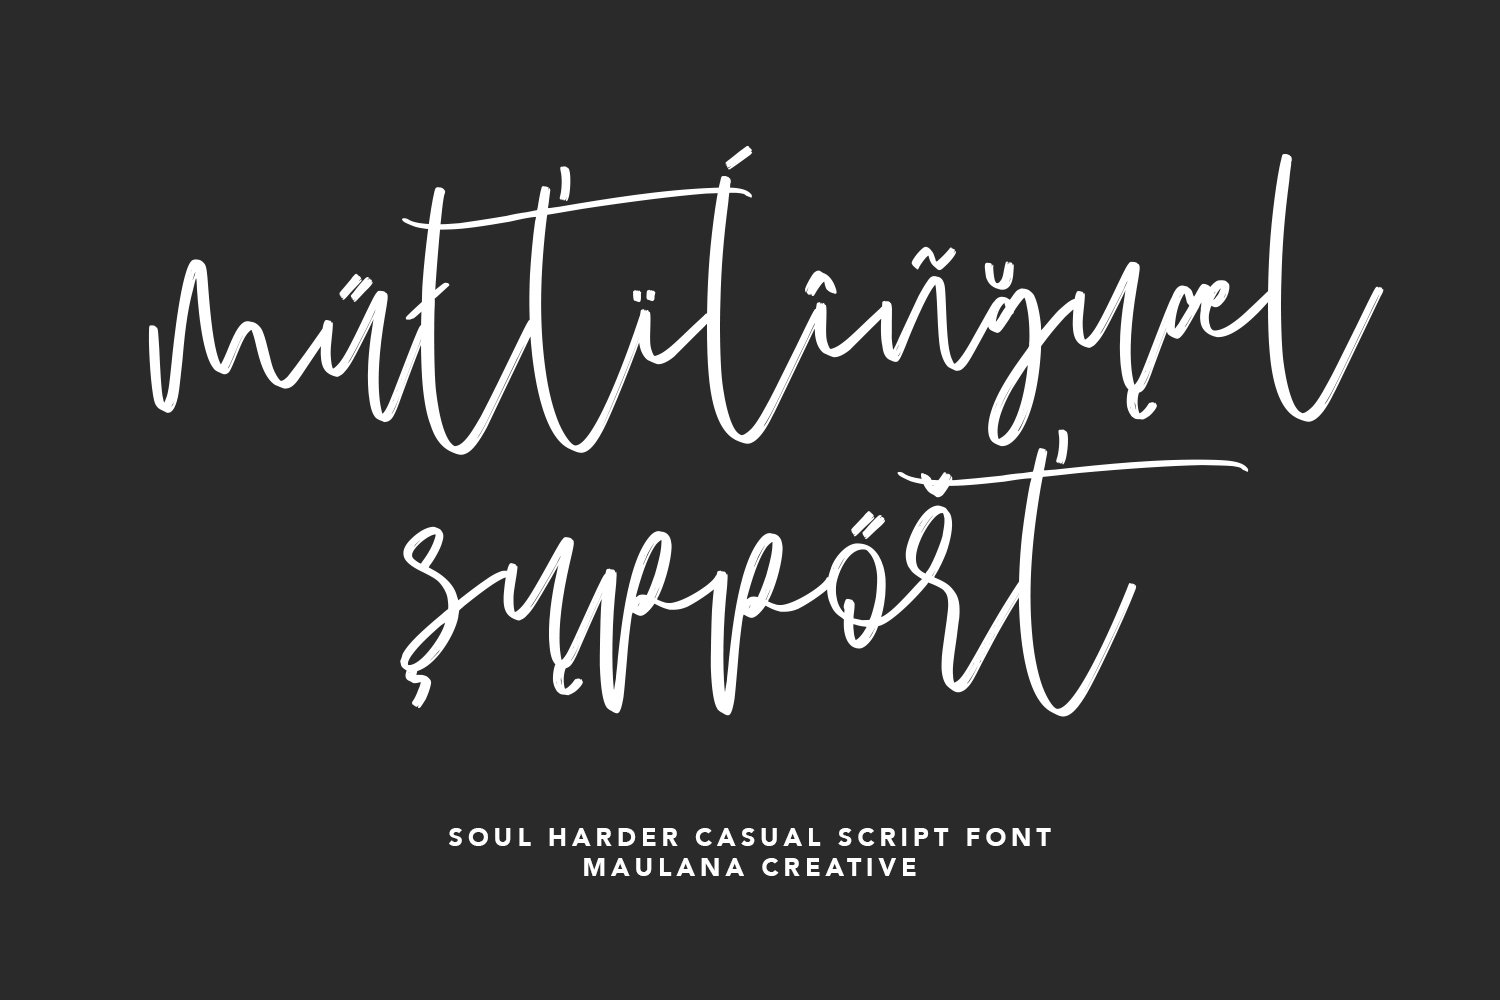 soul harder casual script font 8 9